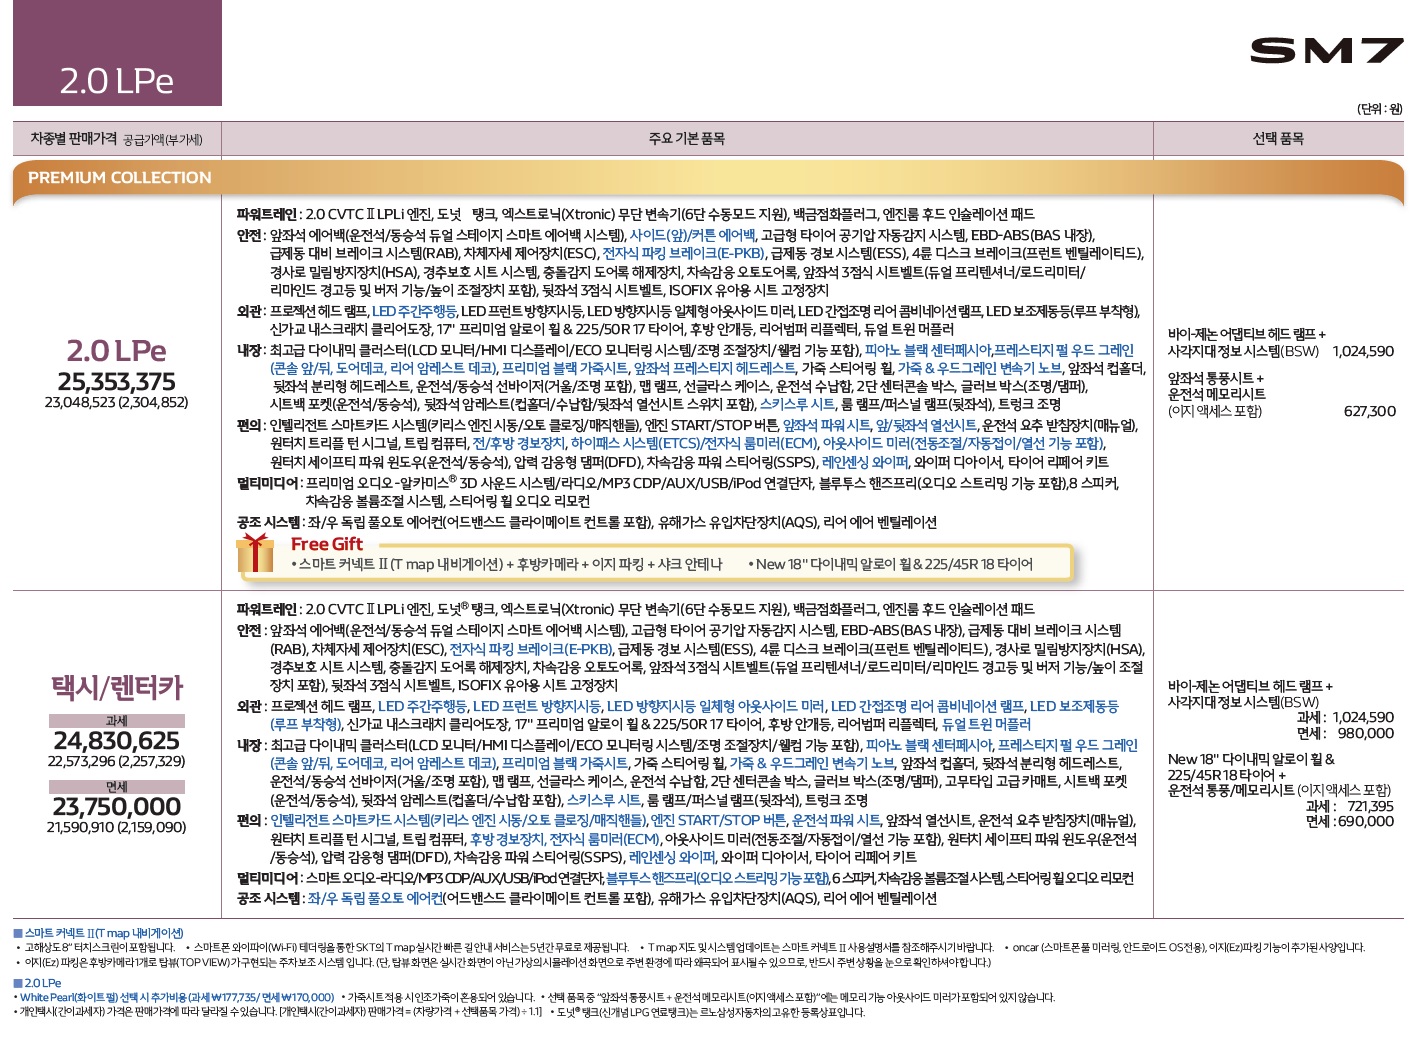 SM7 가격표 - 2019년 07월 -2.jpg